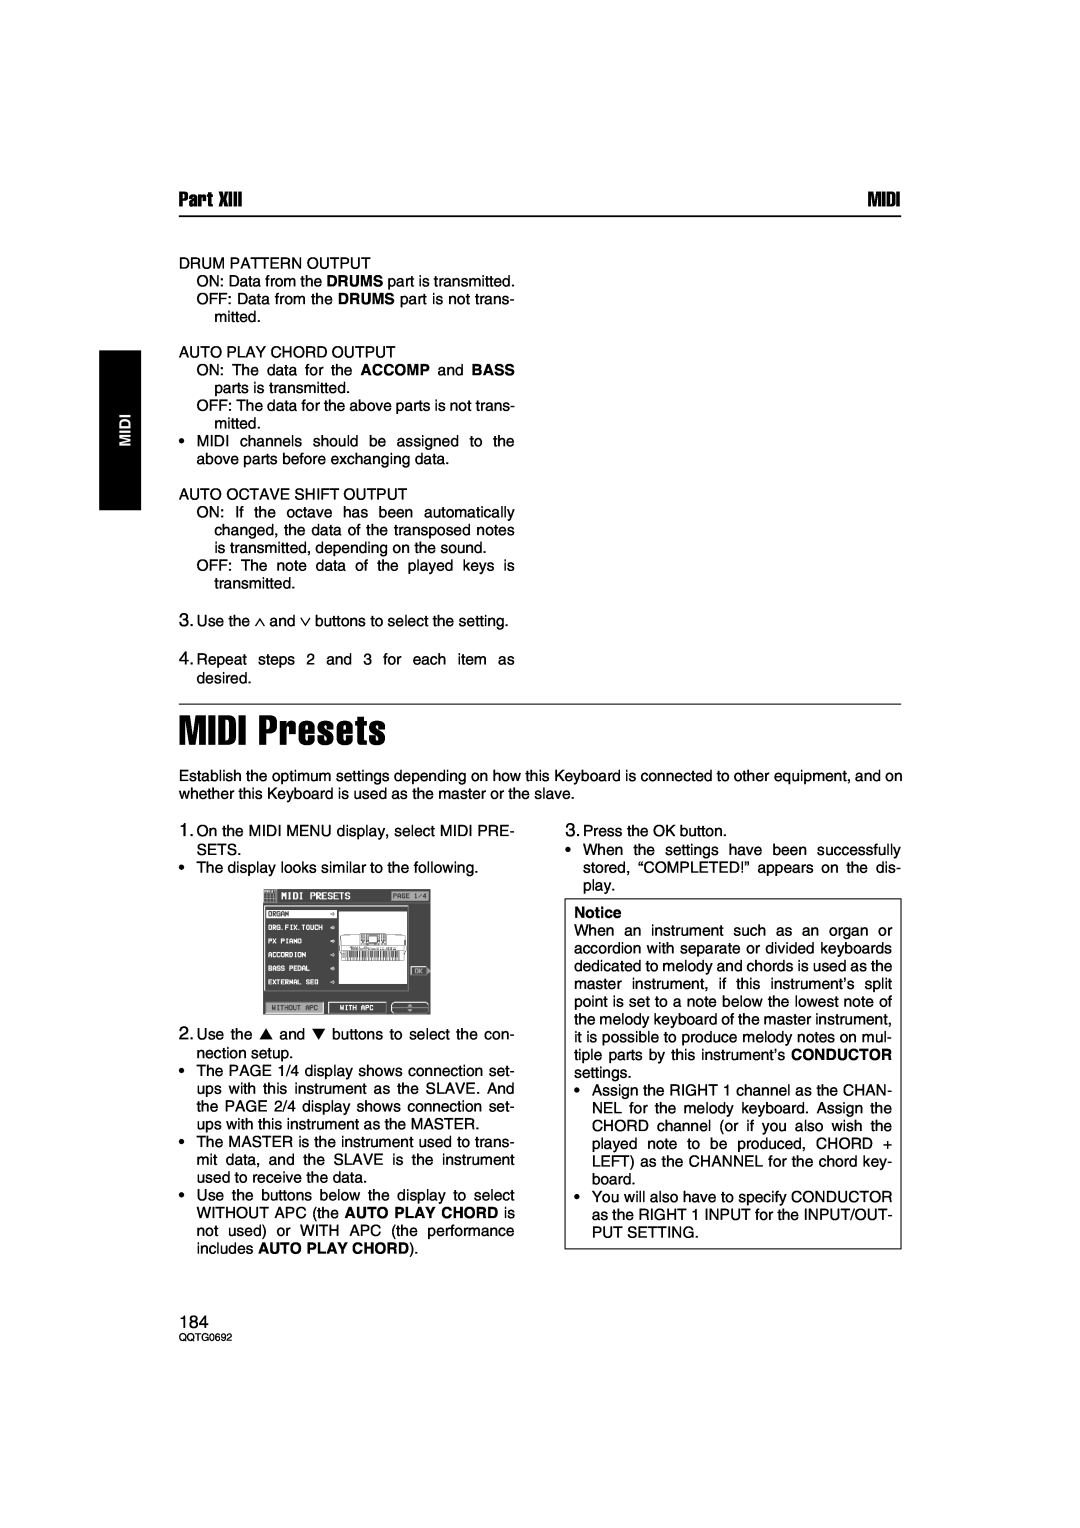 Panasonic SX-KN2600, SX-KN2400 manual MIDI Presets, Part, Midi 